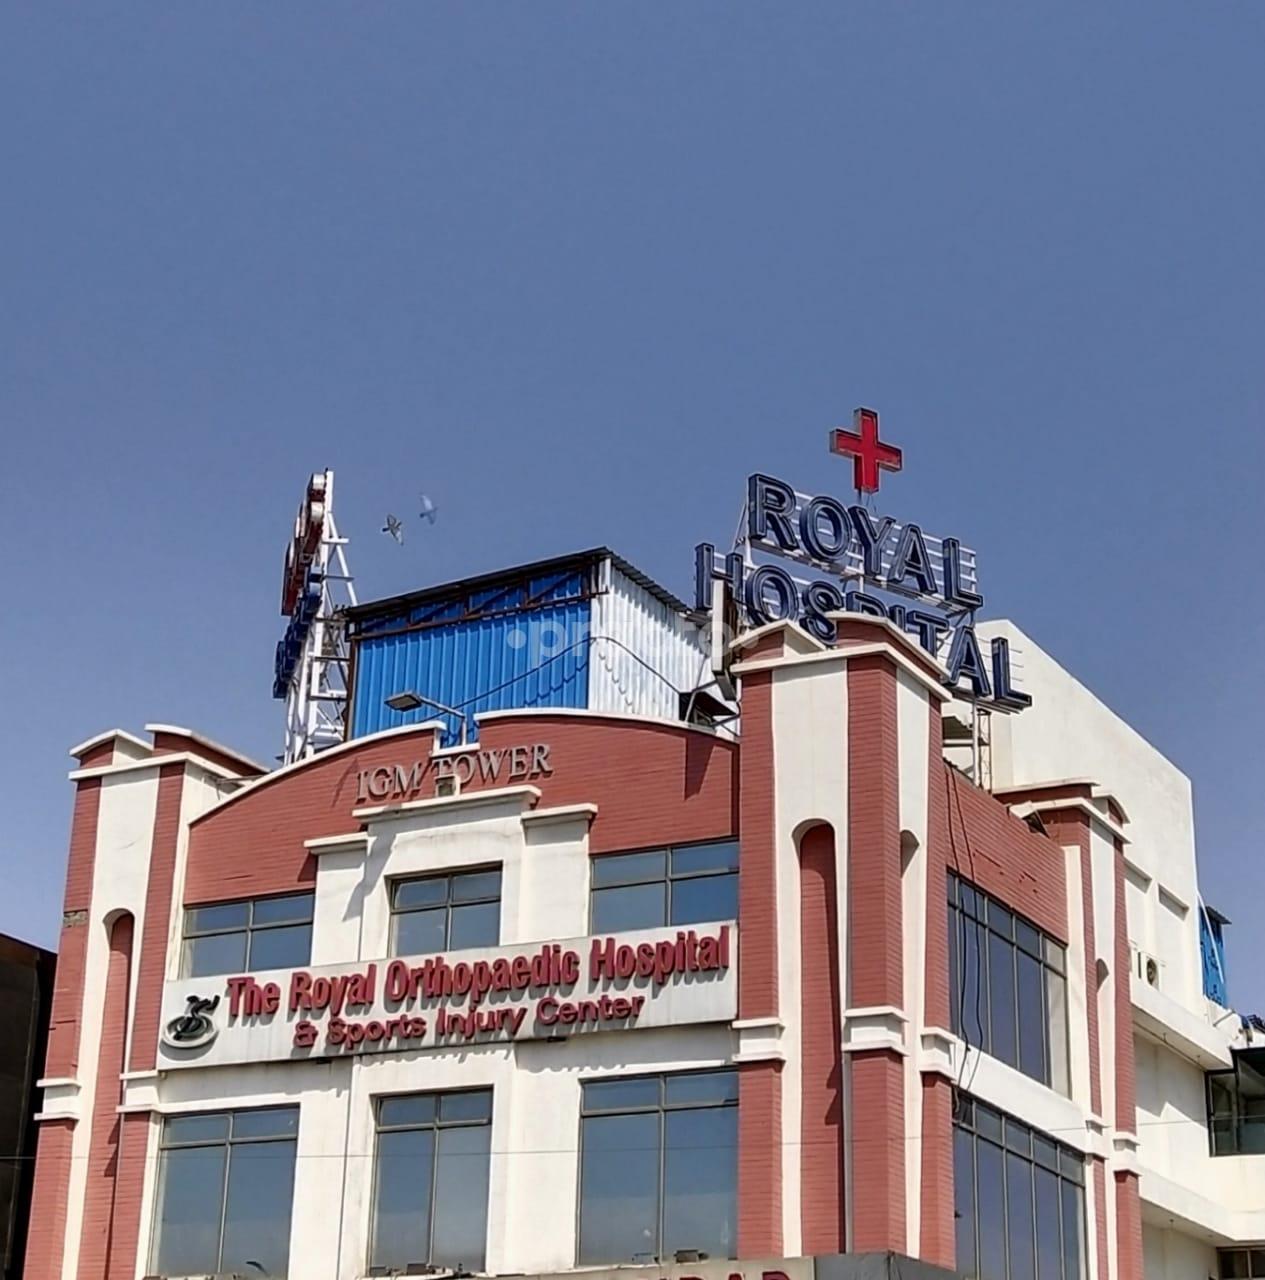 The Royal Orthopaedic Hospital and Sports Injury Centre,B-73-A, Sahakar Marg, Near imli Fatak, Lal Kothi Scheme ,Jaipur ,Rajasthan, India, India